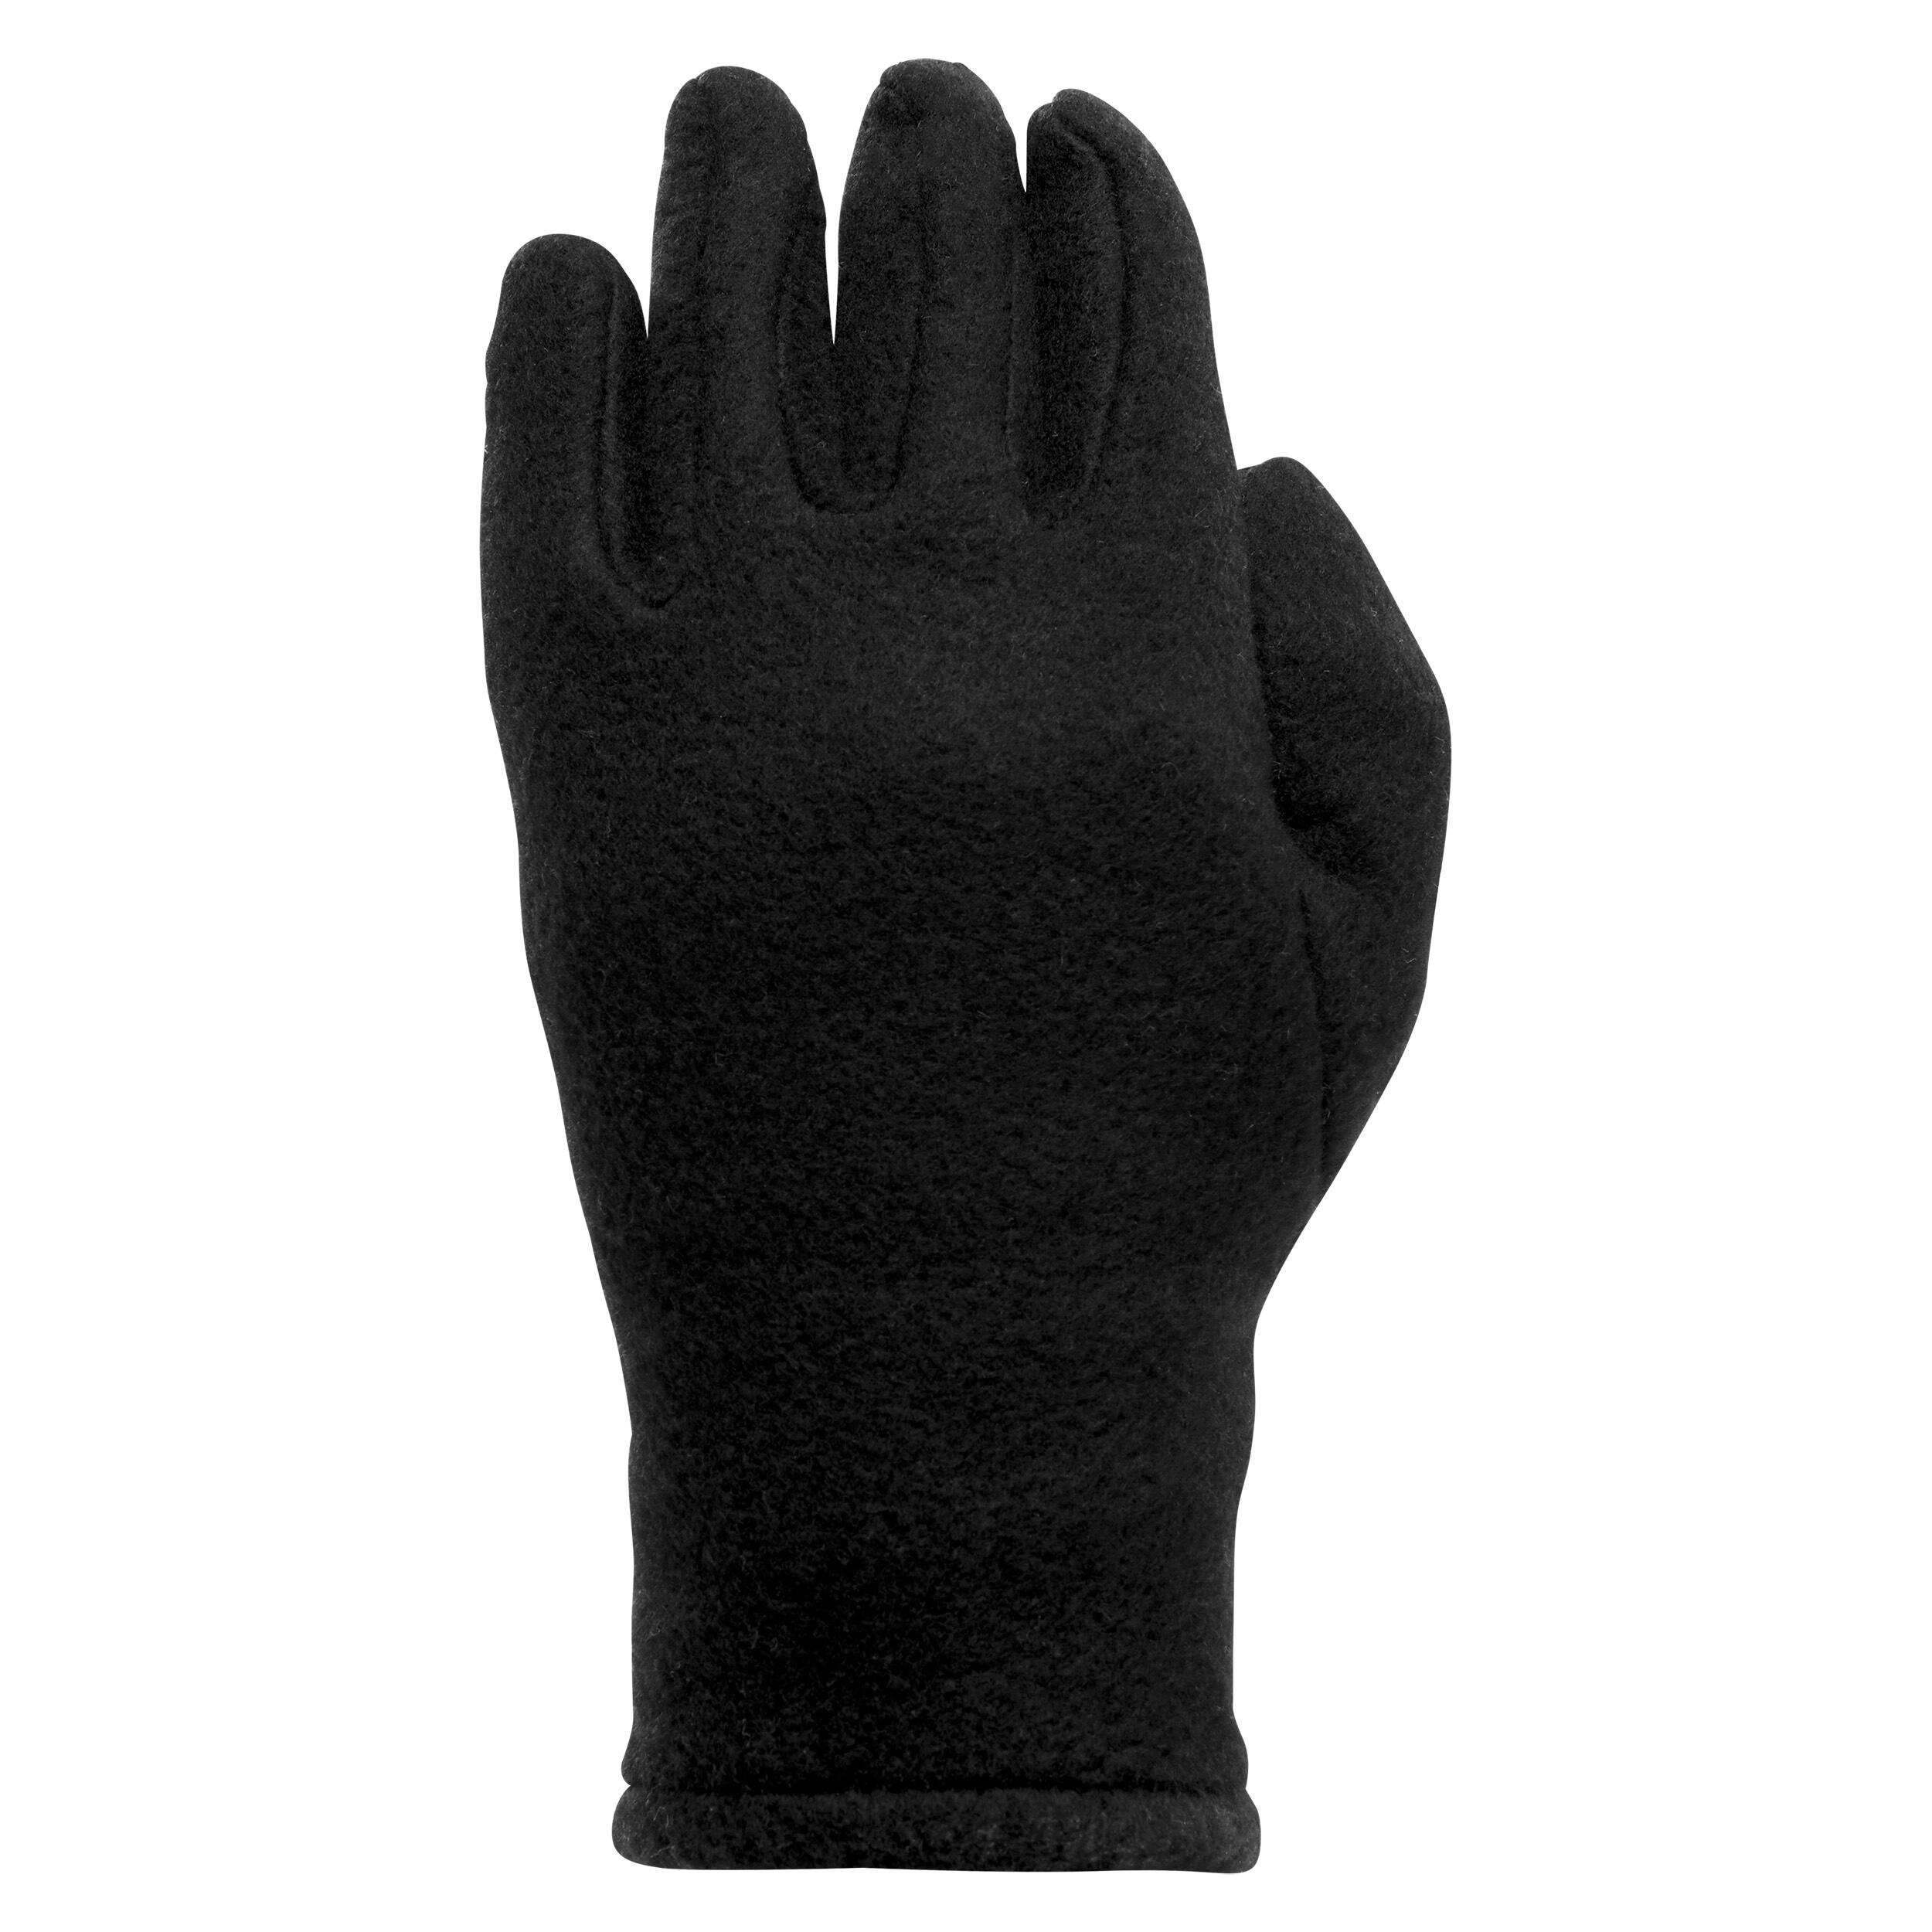 Mănuși din polar Negru SH100 negru Copii 4-14 ani decathlon.ro